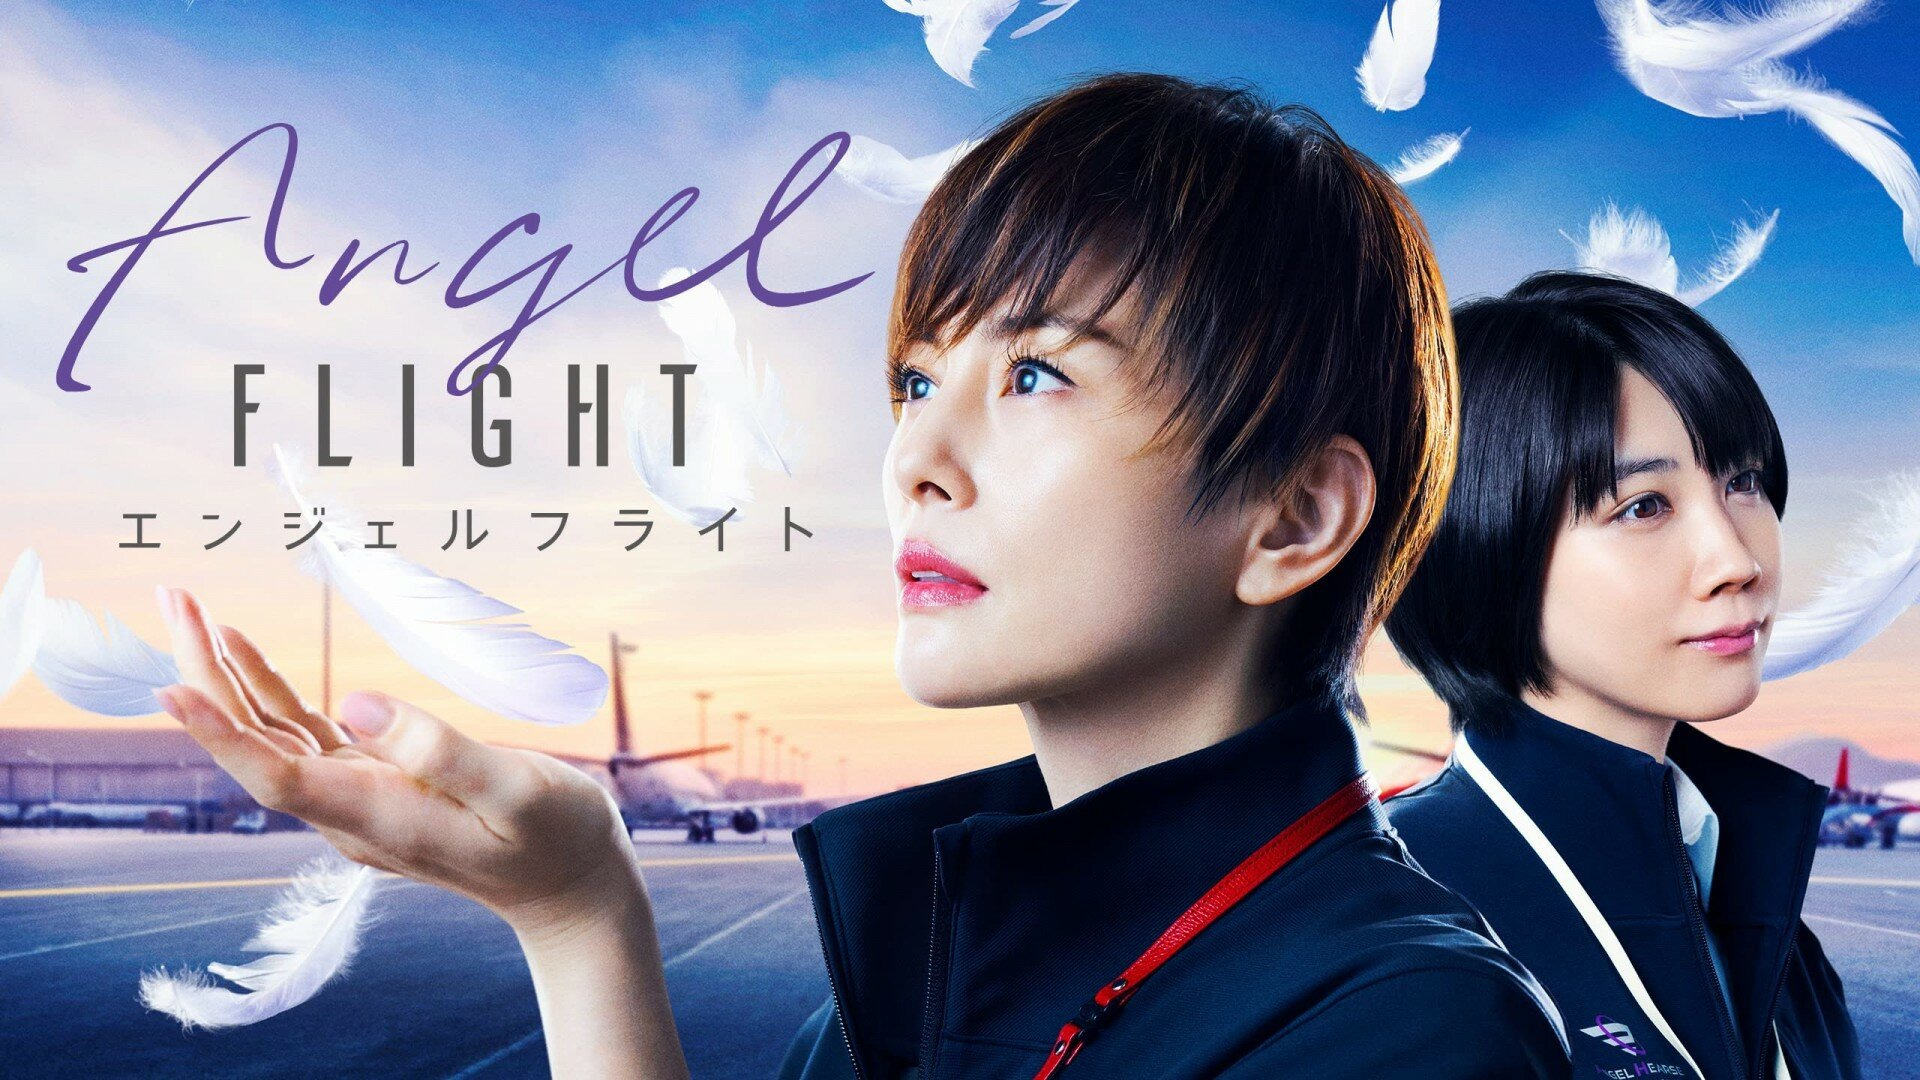 Show Angel Flight